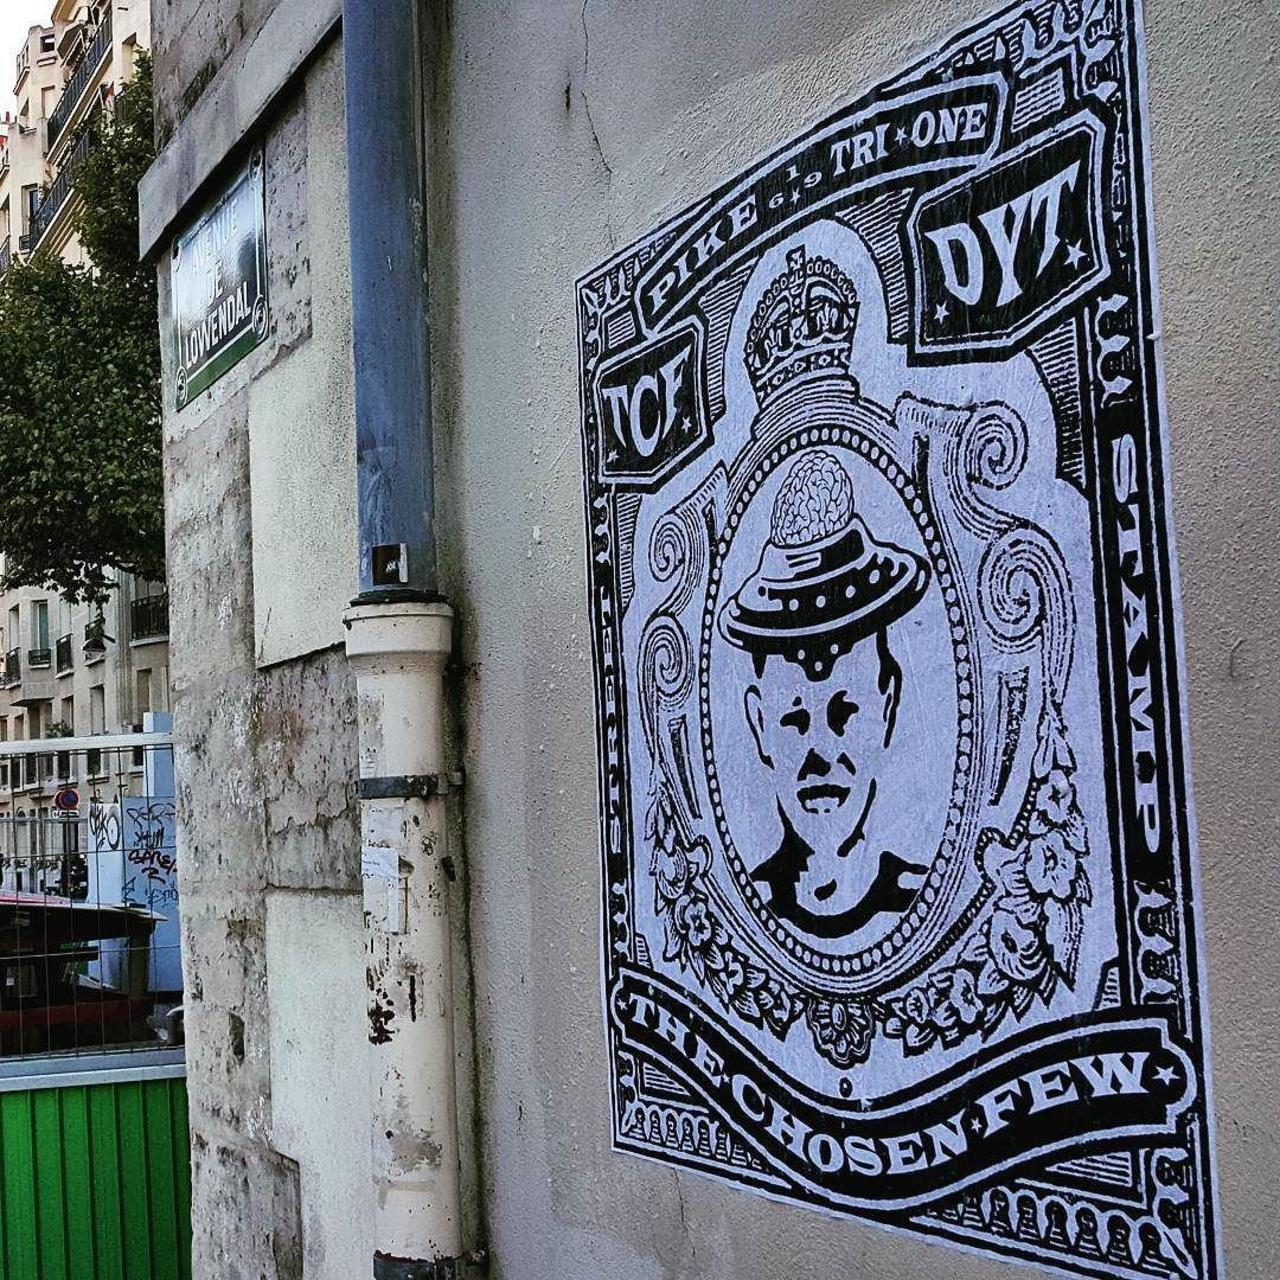 #Paris #graffiti photo by @the169 http://ift.tt/1PVqvPE #StreetArt http://t.co/idRY8xcFhX